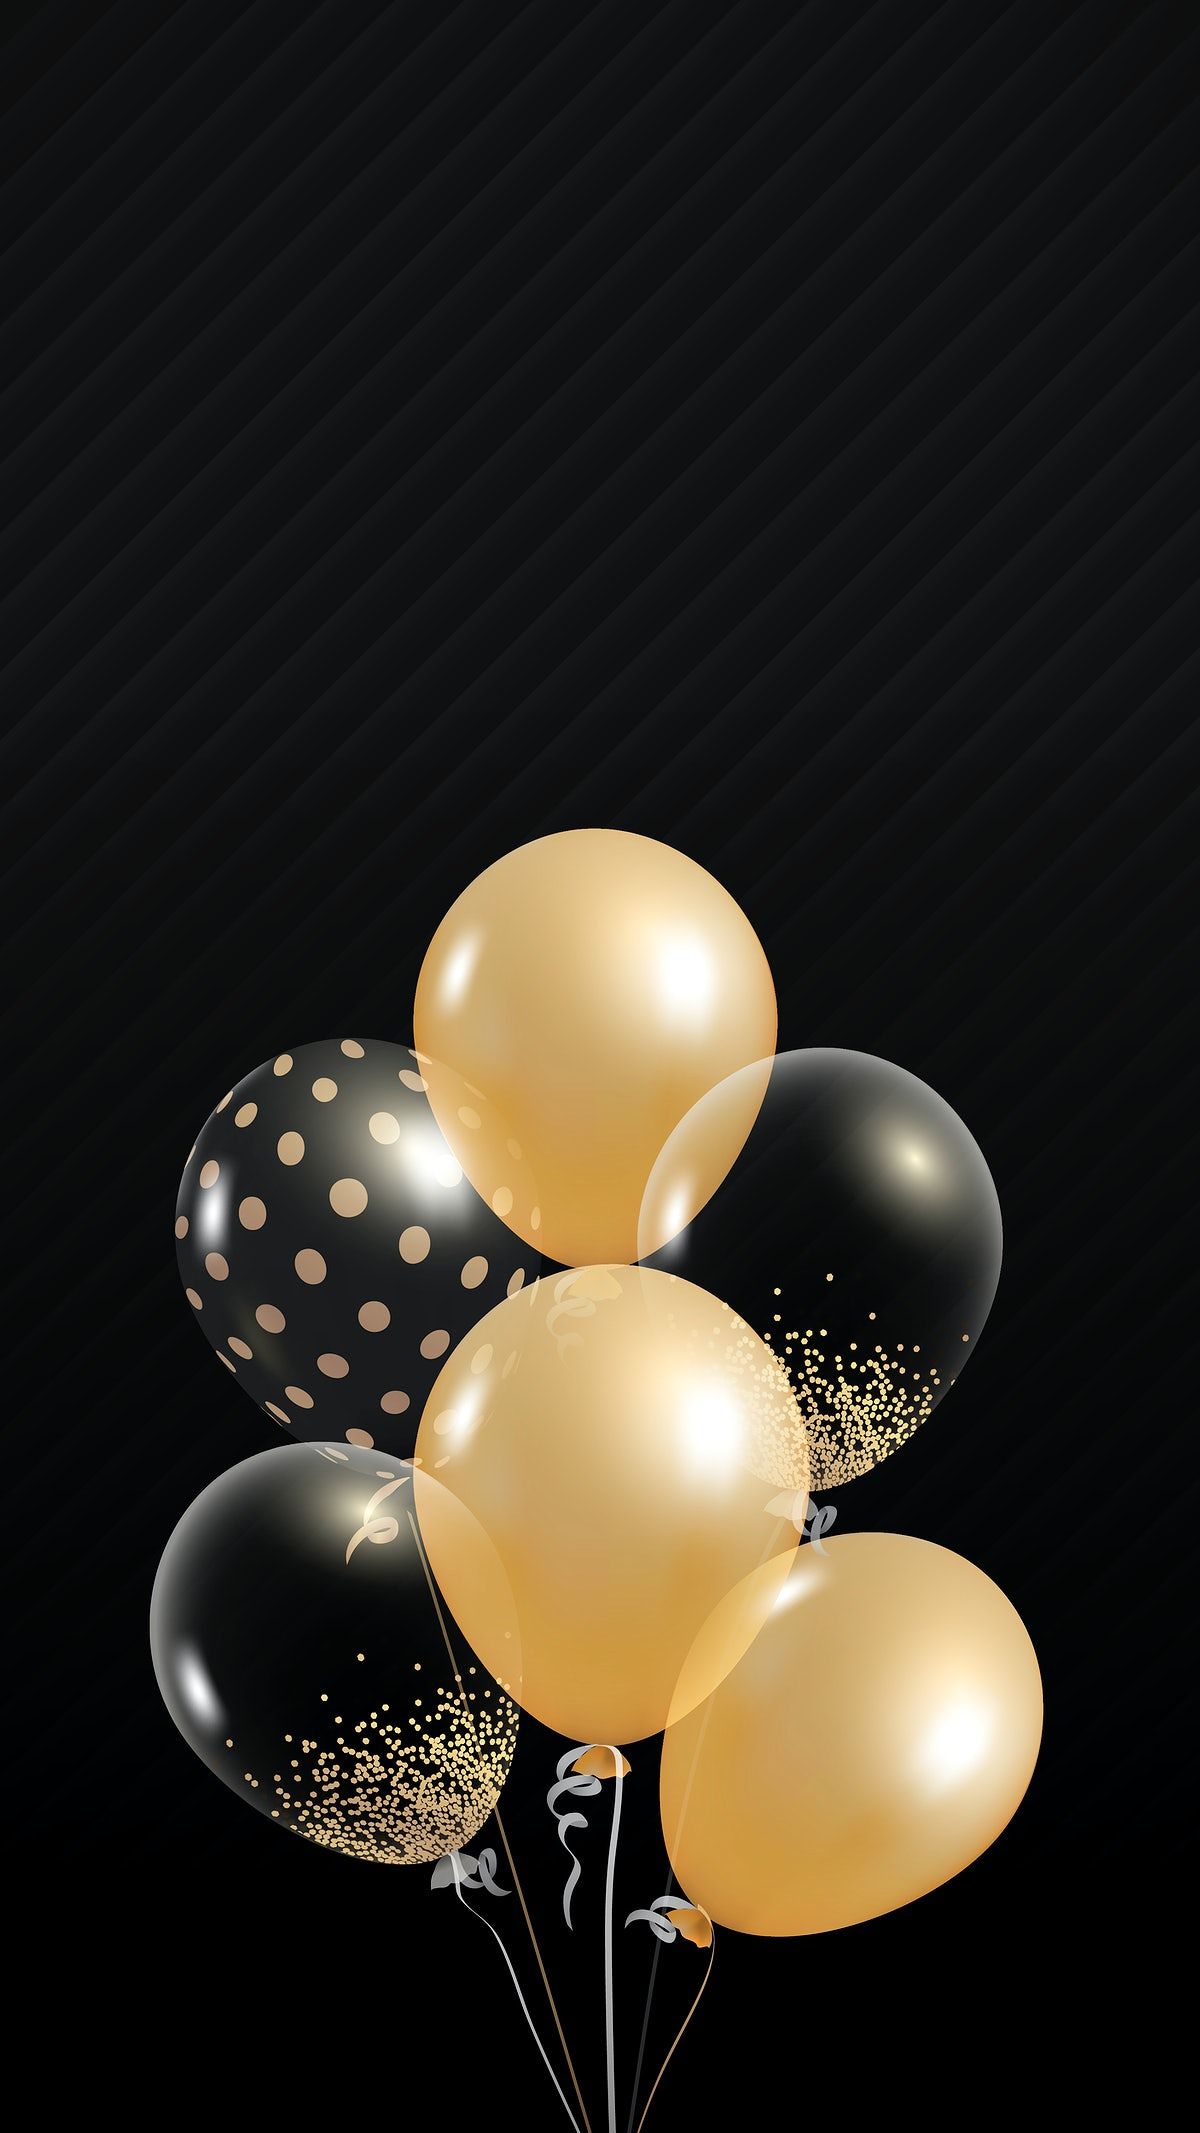 Black and gold balloons phone wallpaperrawpixel.com